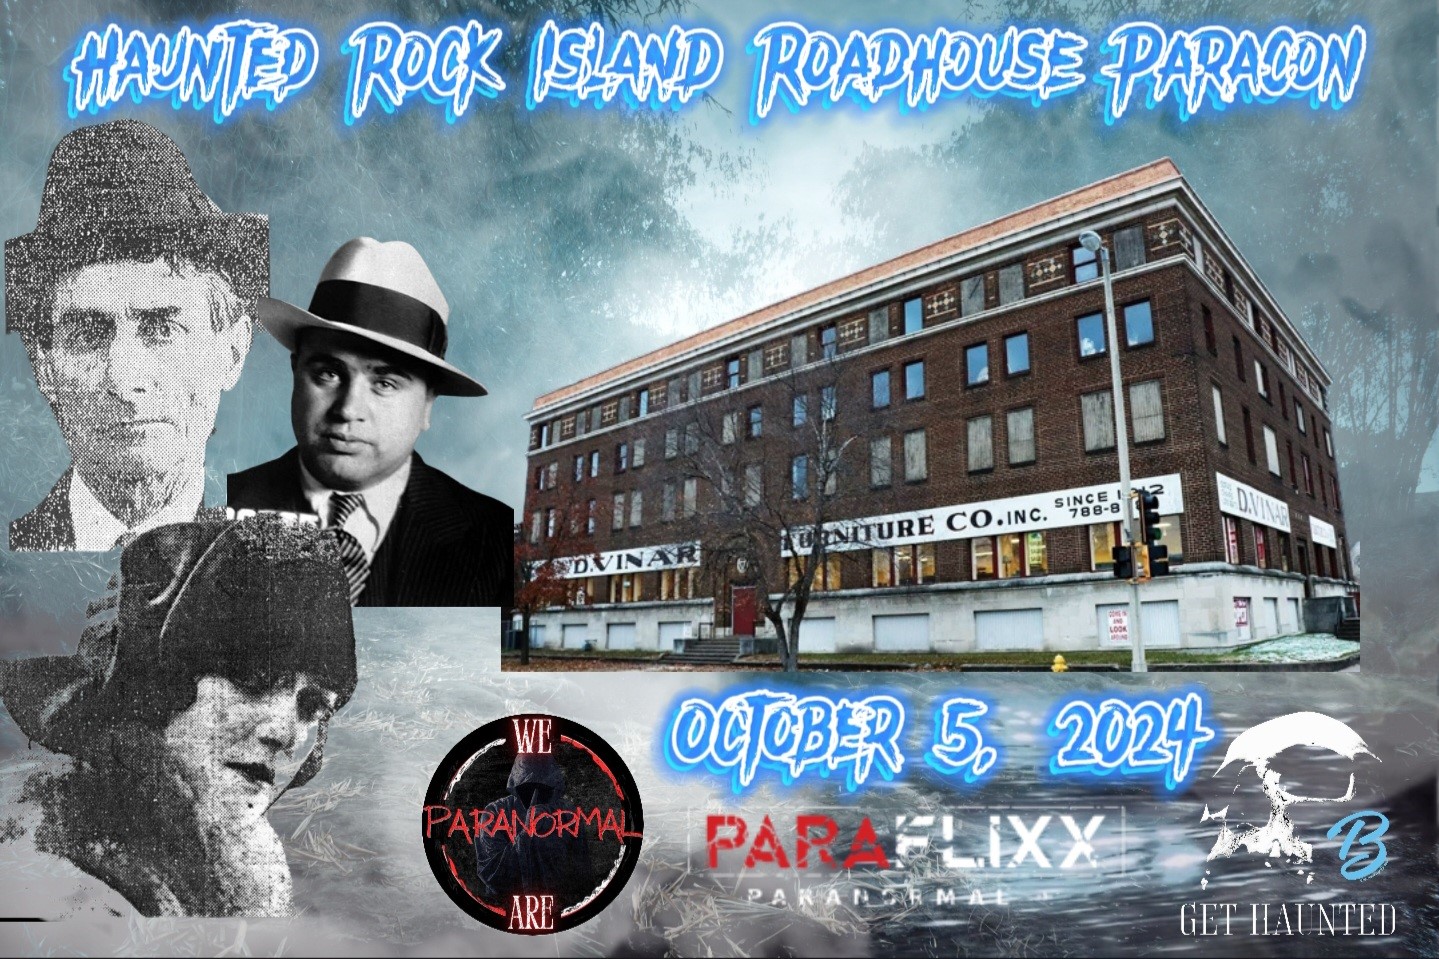 Haunted Rock Island Roadhouse Paracon  on Oct 05, 09:00@Haunted Rock Island Roahouse - Buy tickets and Get information on Haunted Rock Island Roadhouse 